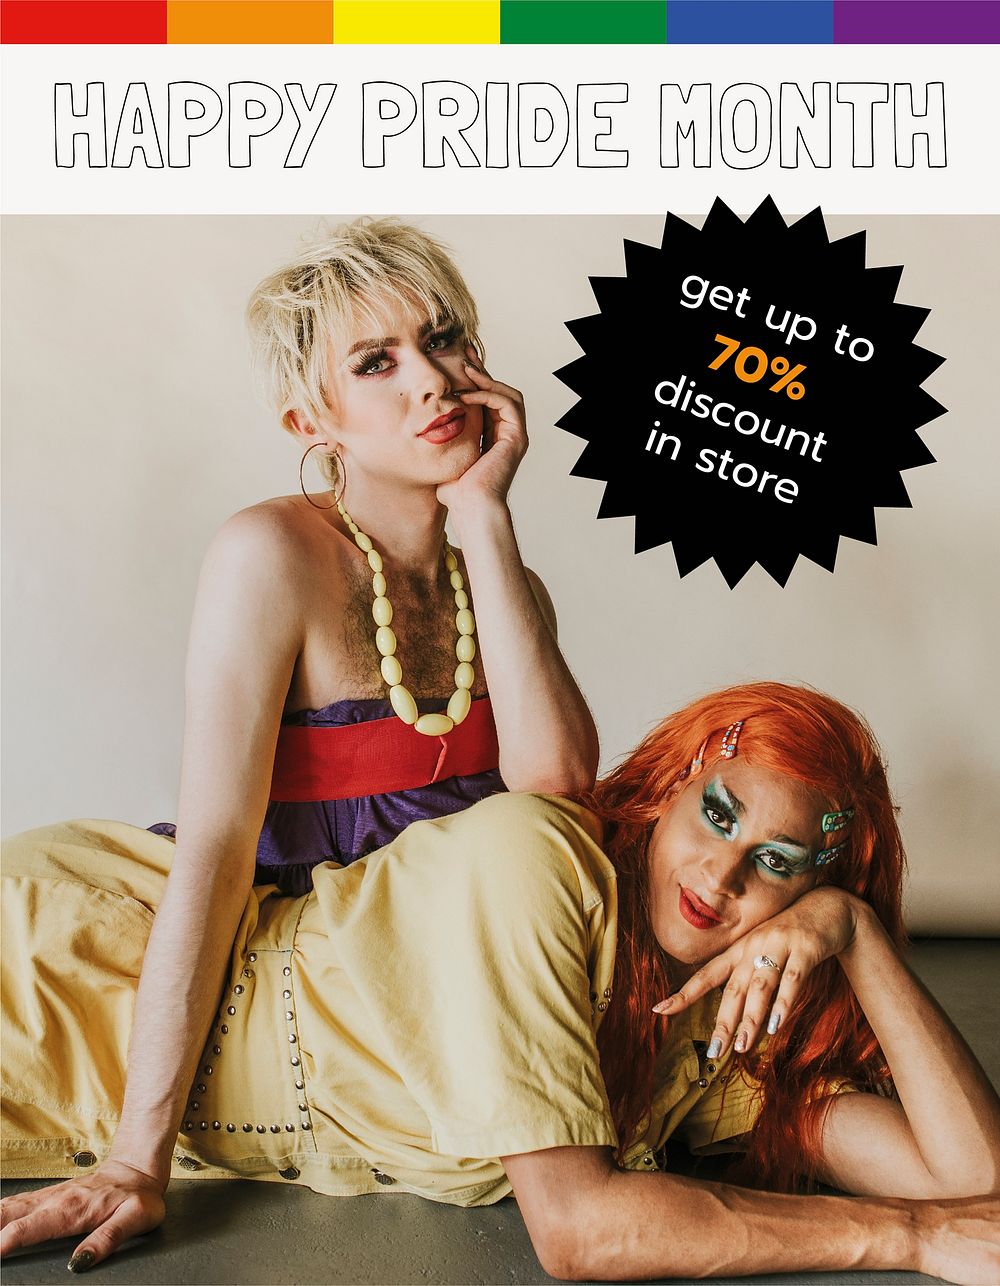 Pride month sale flyer template, drag queens photo vector